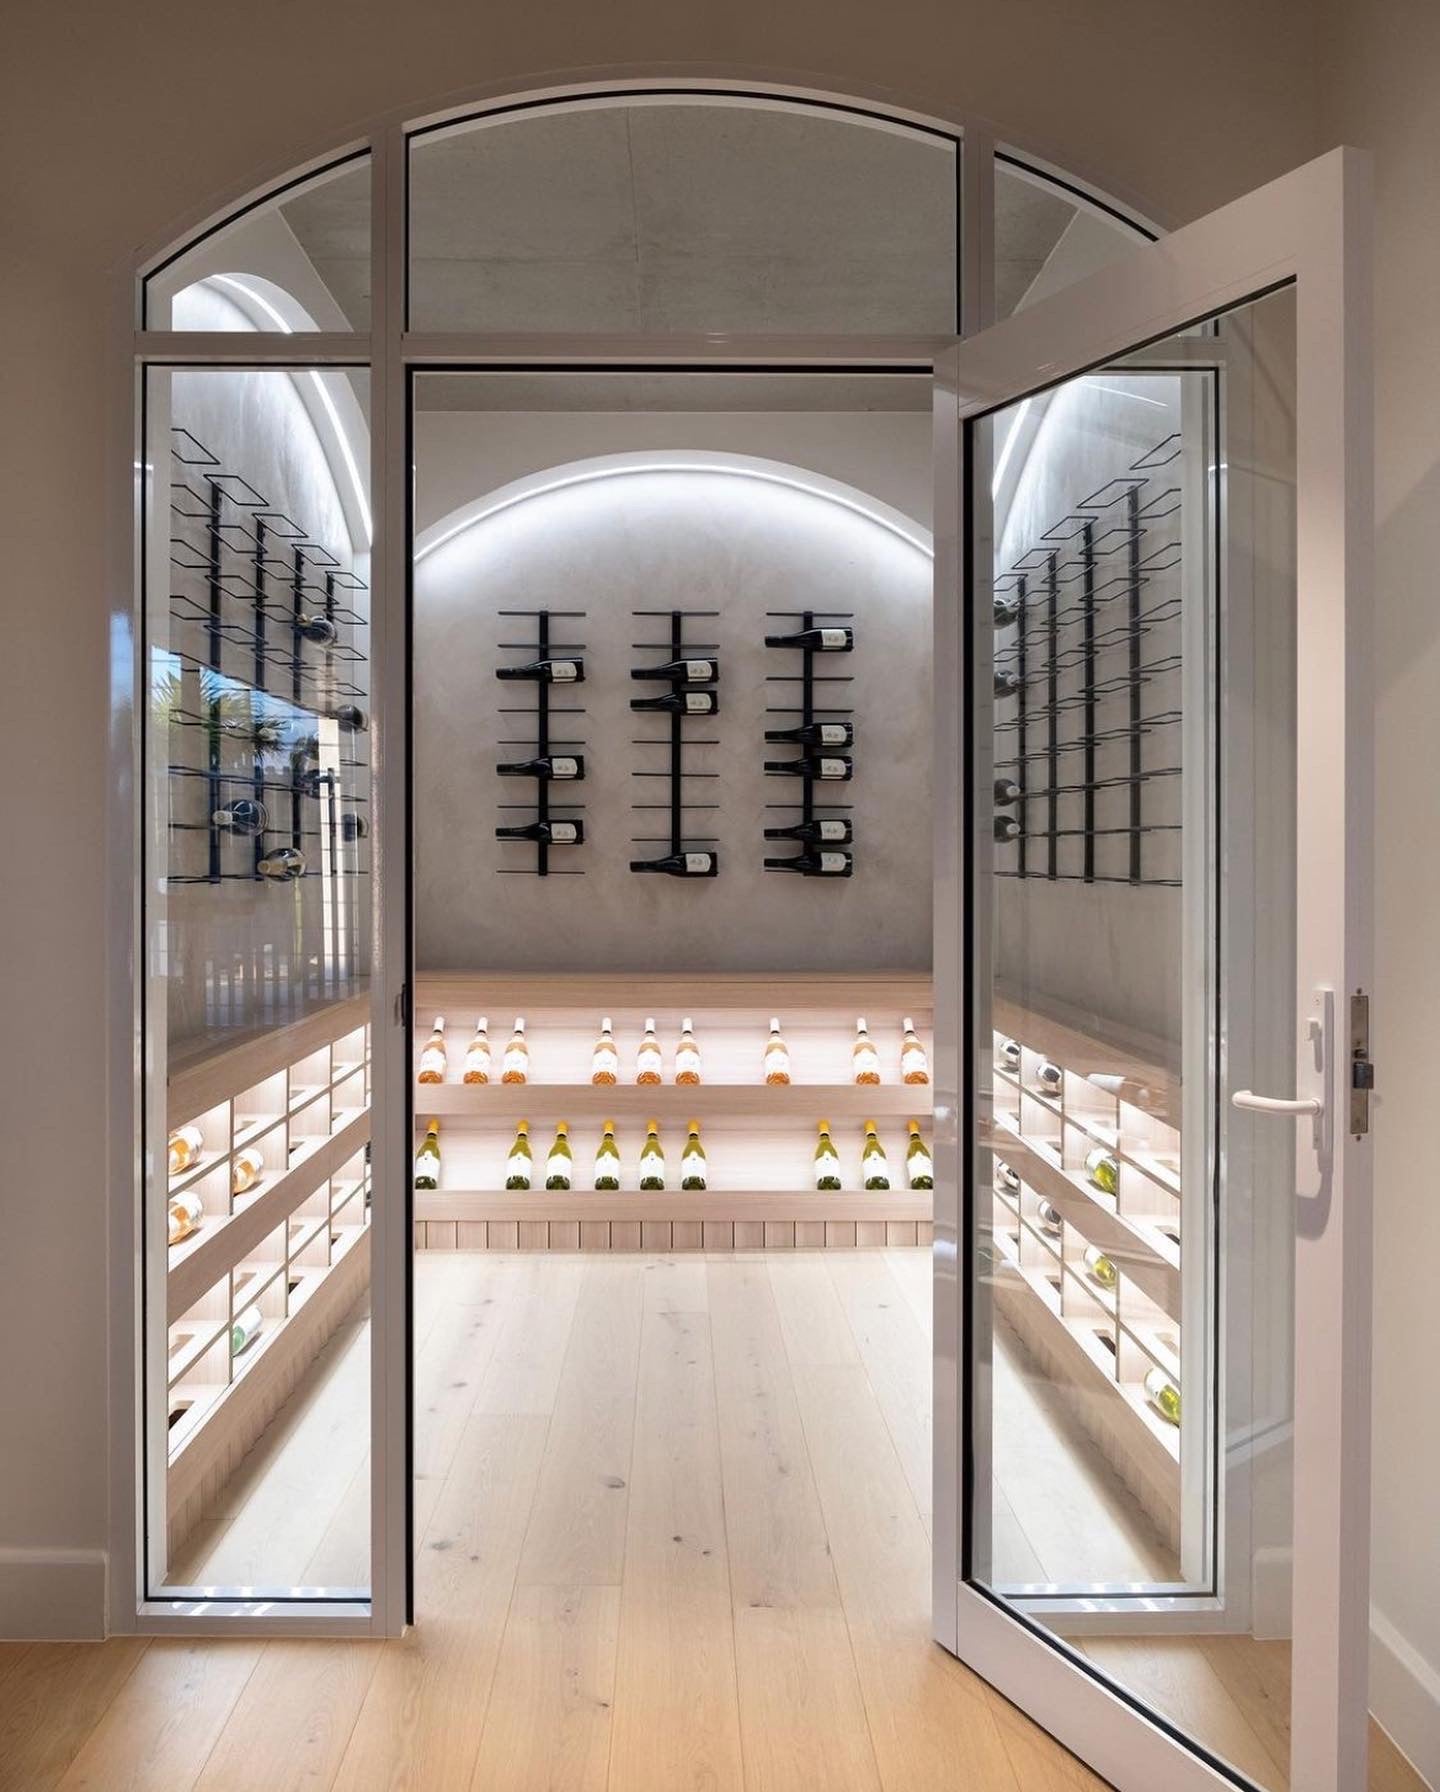 Creating a Stunning Wine Display with Wall-Mounted Racks